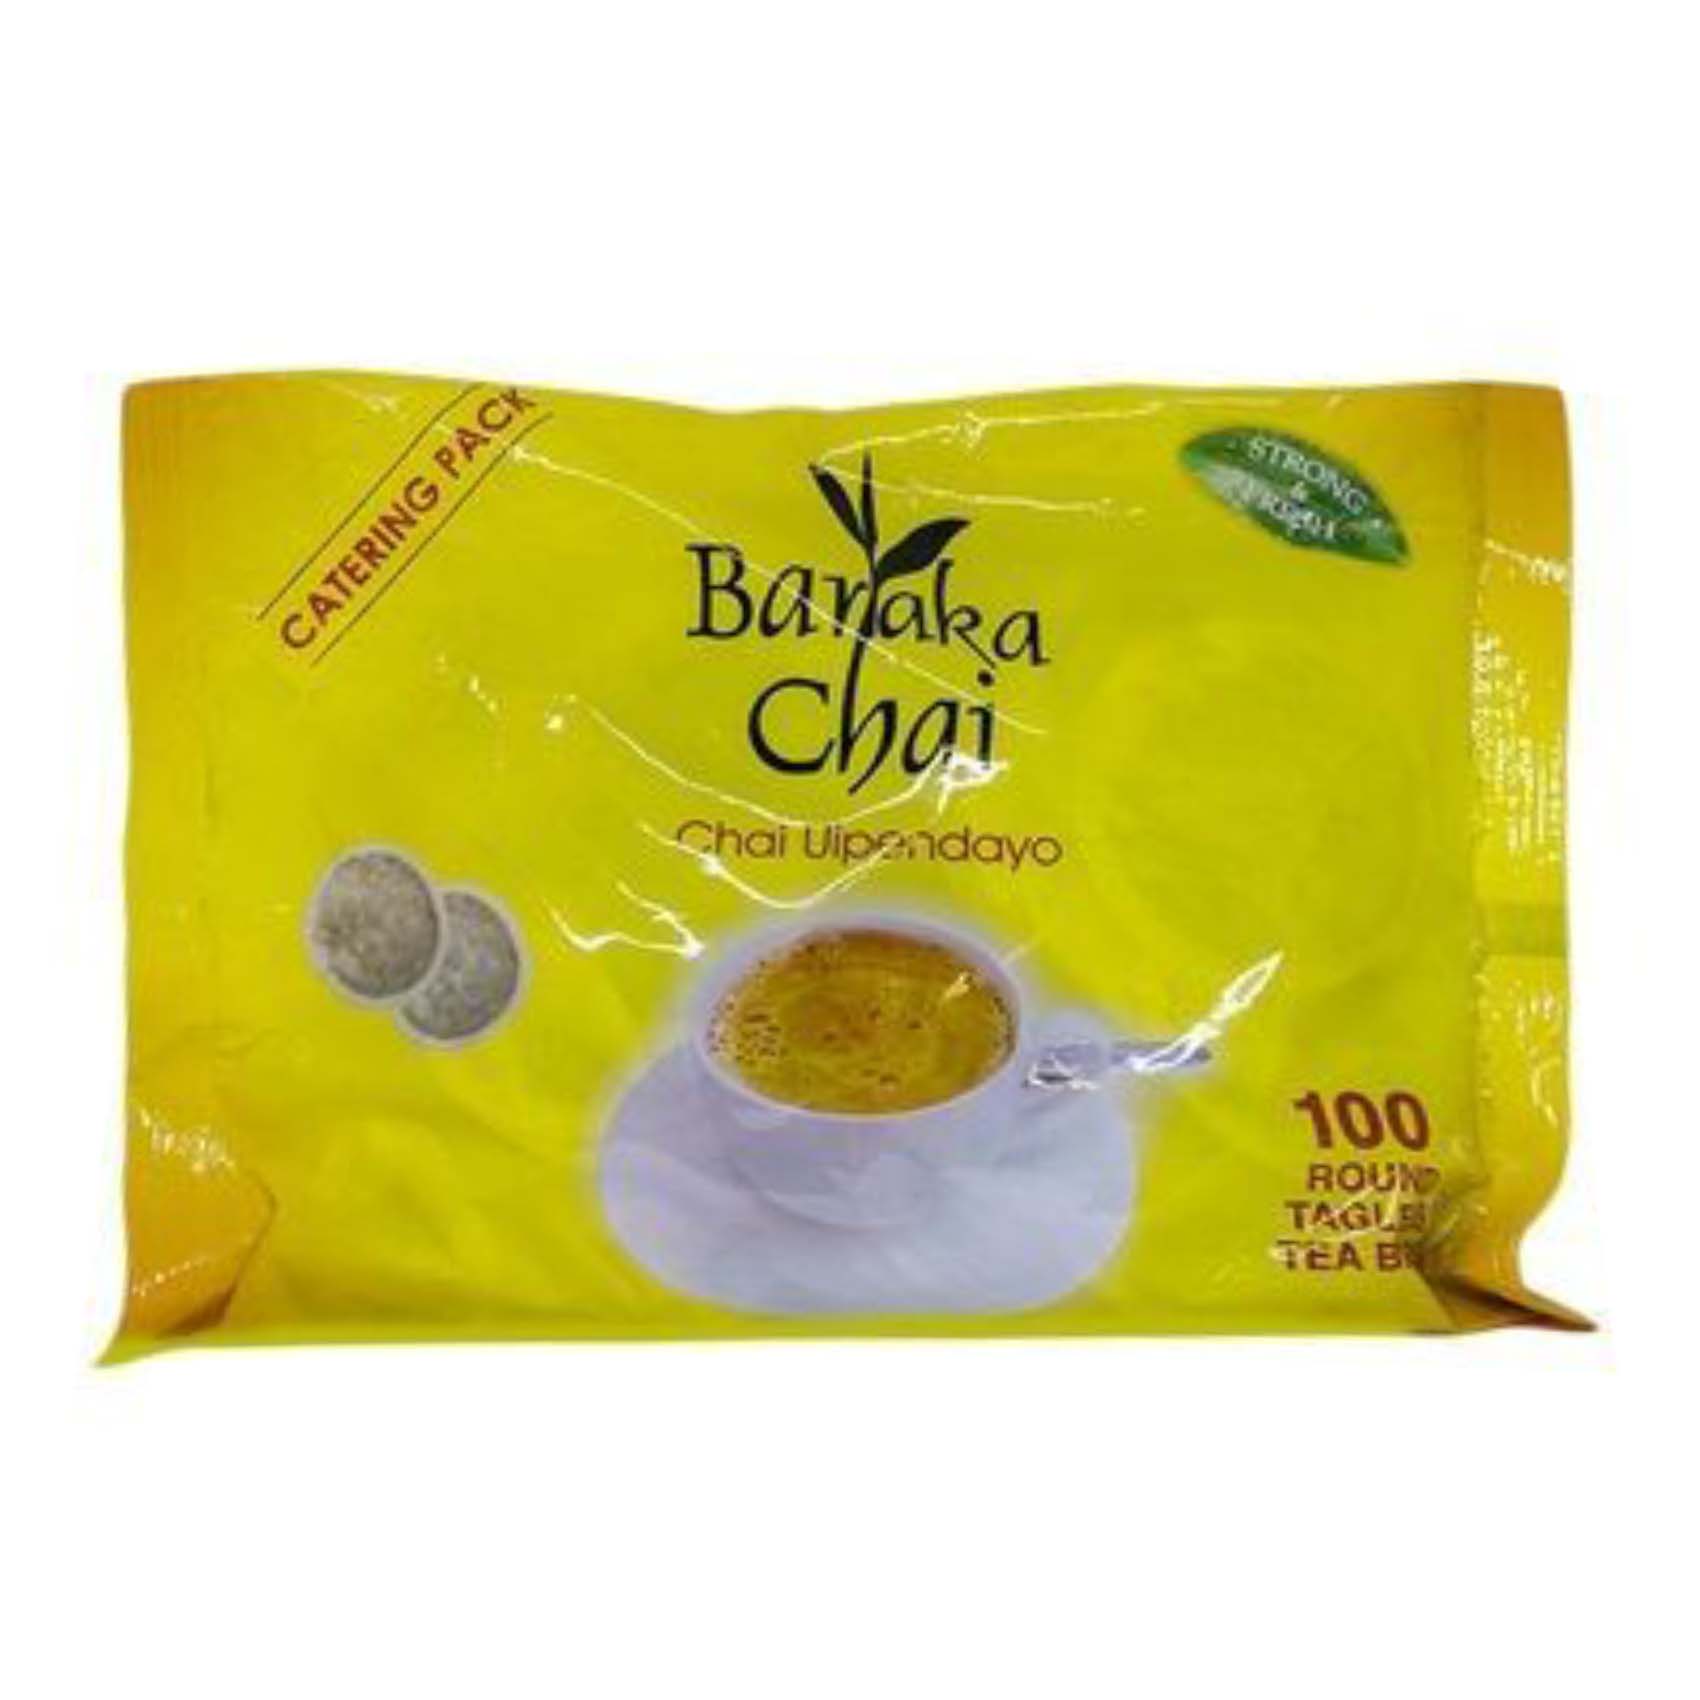 Baraka Chai Strong And Fresh Tea Bags 200g (100 Pieces)